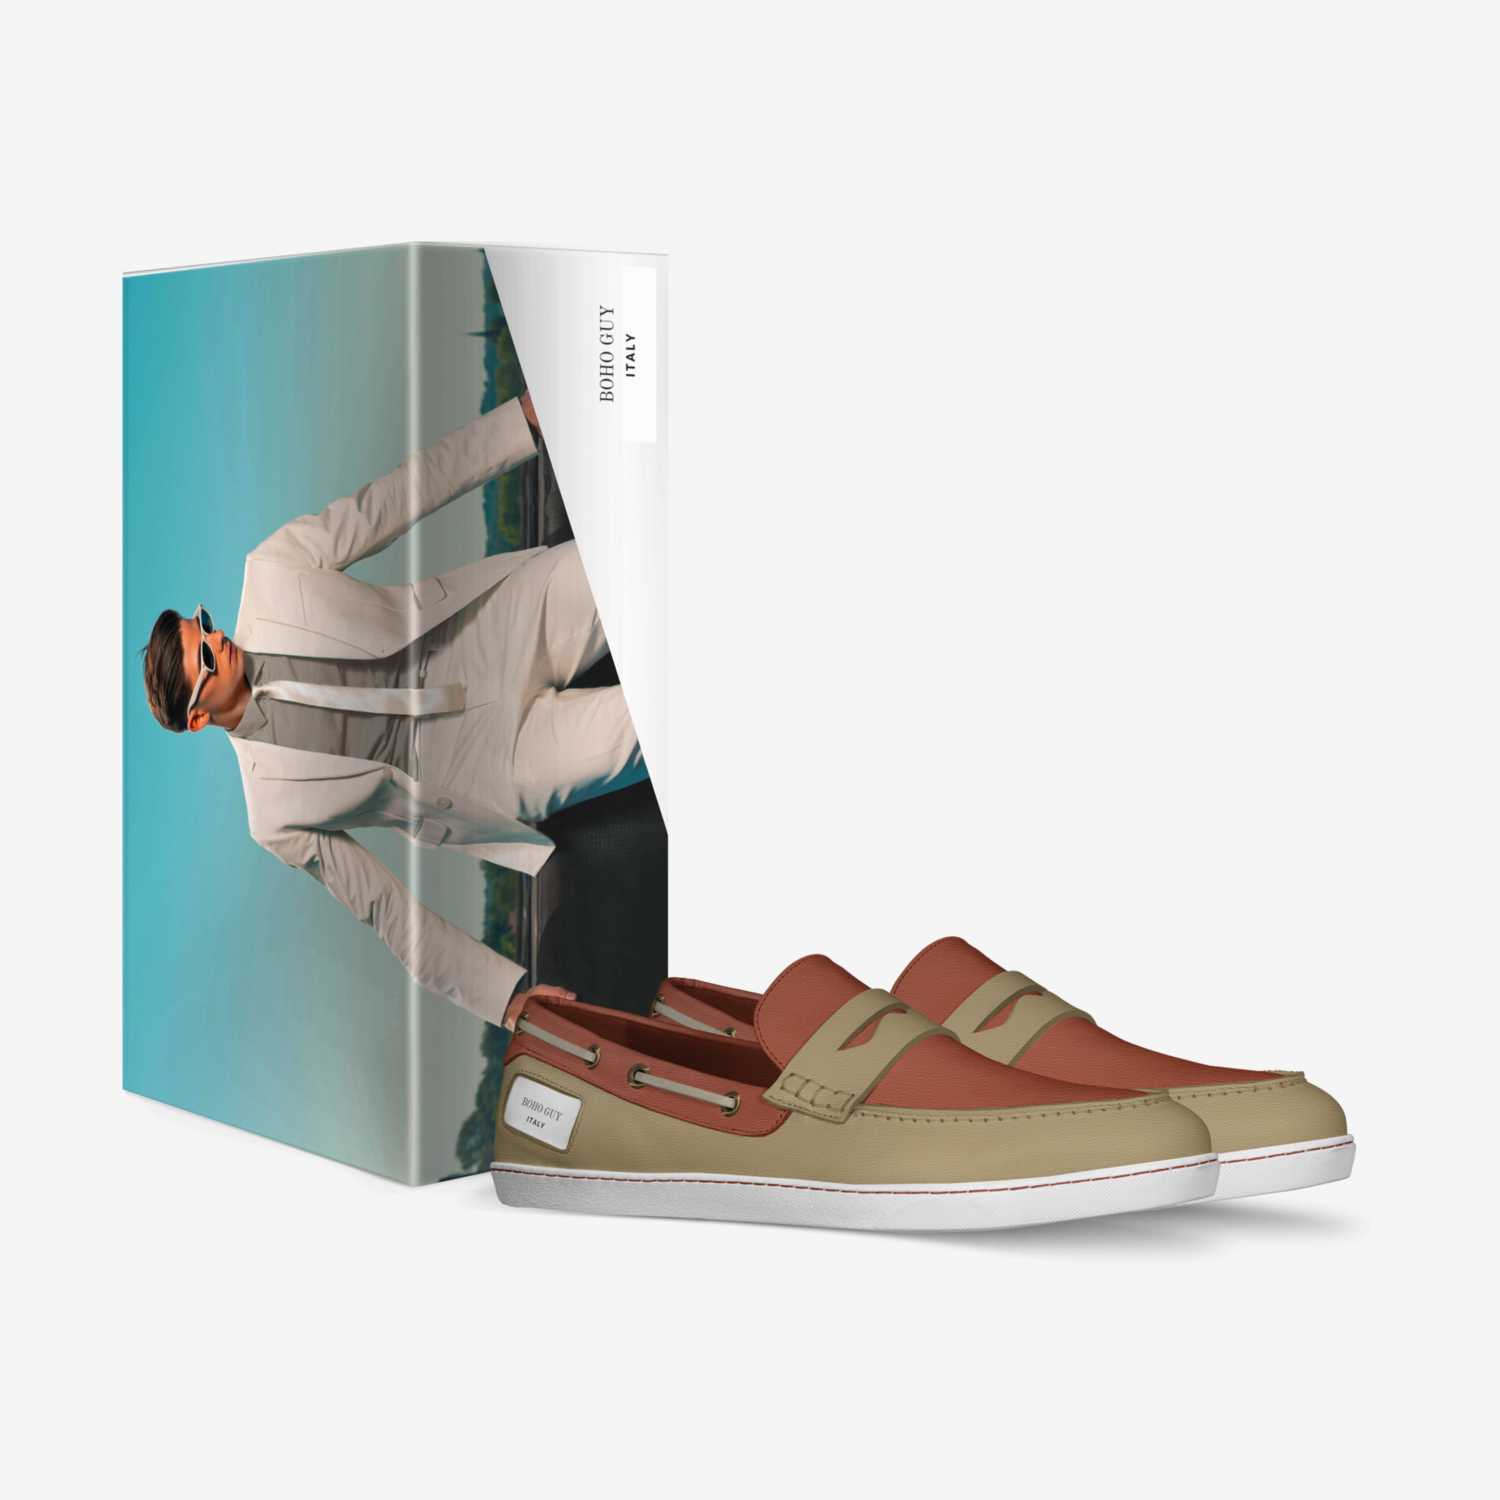 BOHO GUY custom made in Italy shoes by Marijke Verkerk | Box view